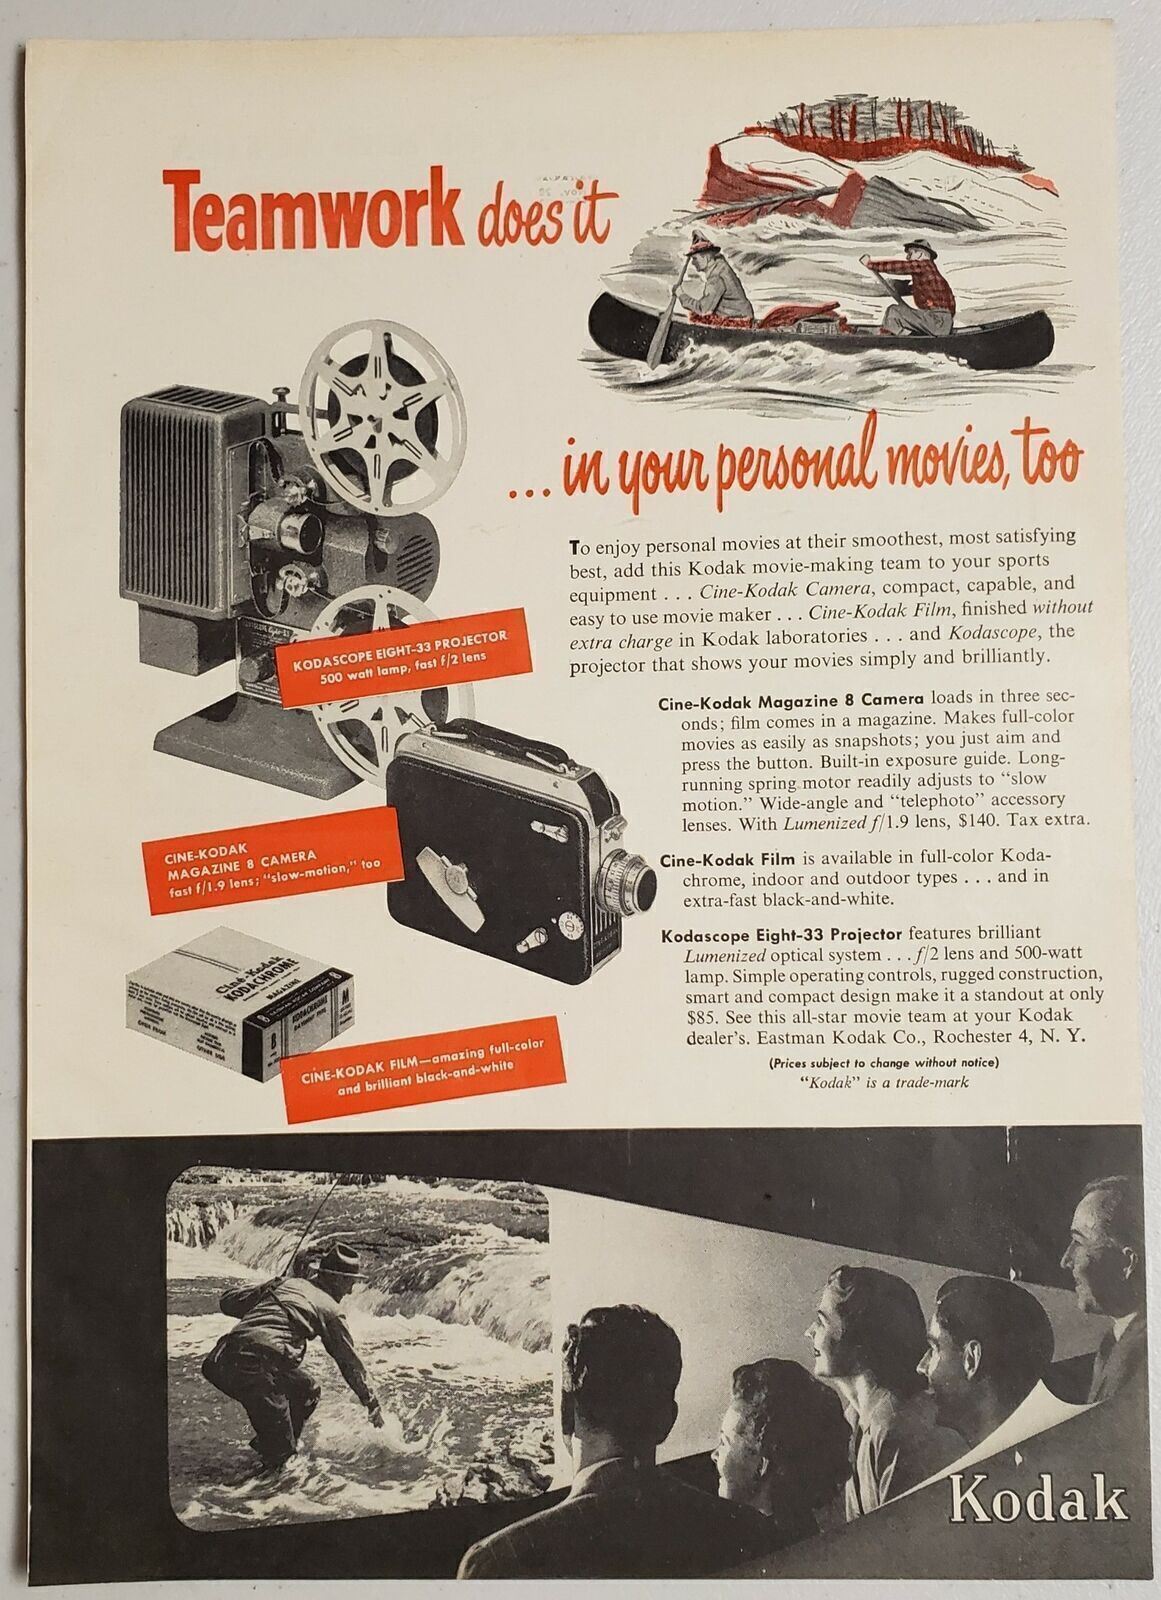 1949 Print Ad Cine-Kodak Magazine 8 Movie Camera Eight 33 Projector Rochester,NY